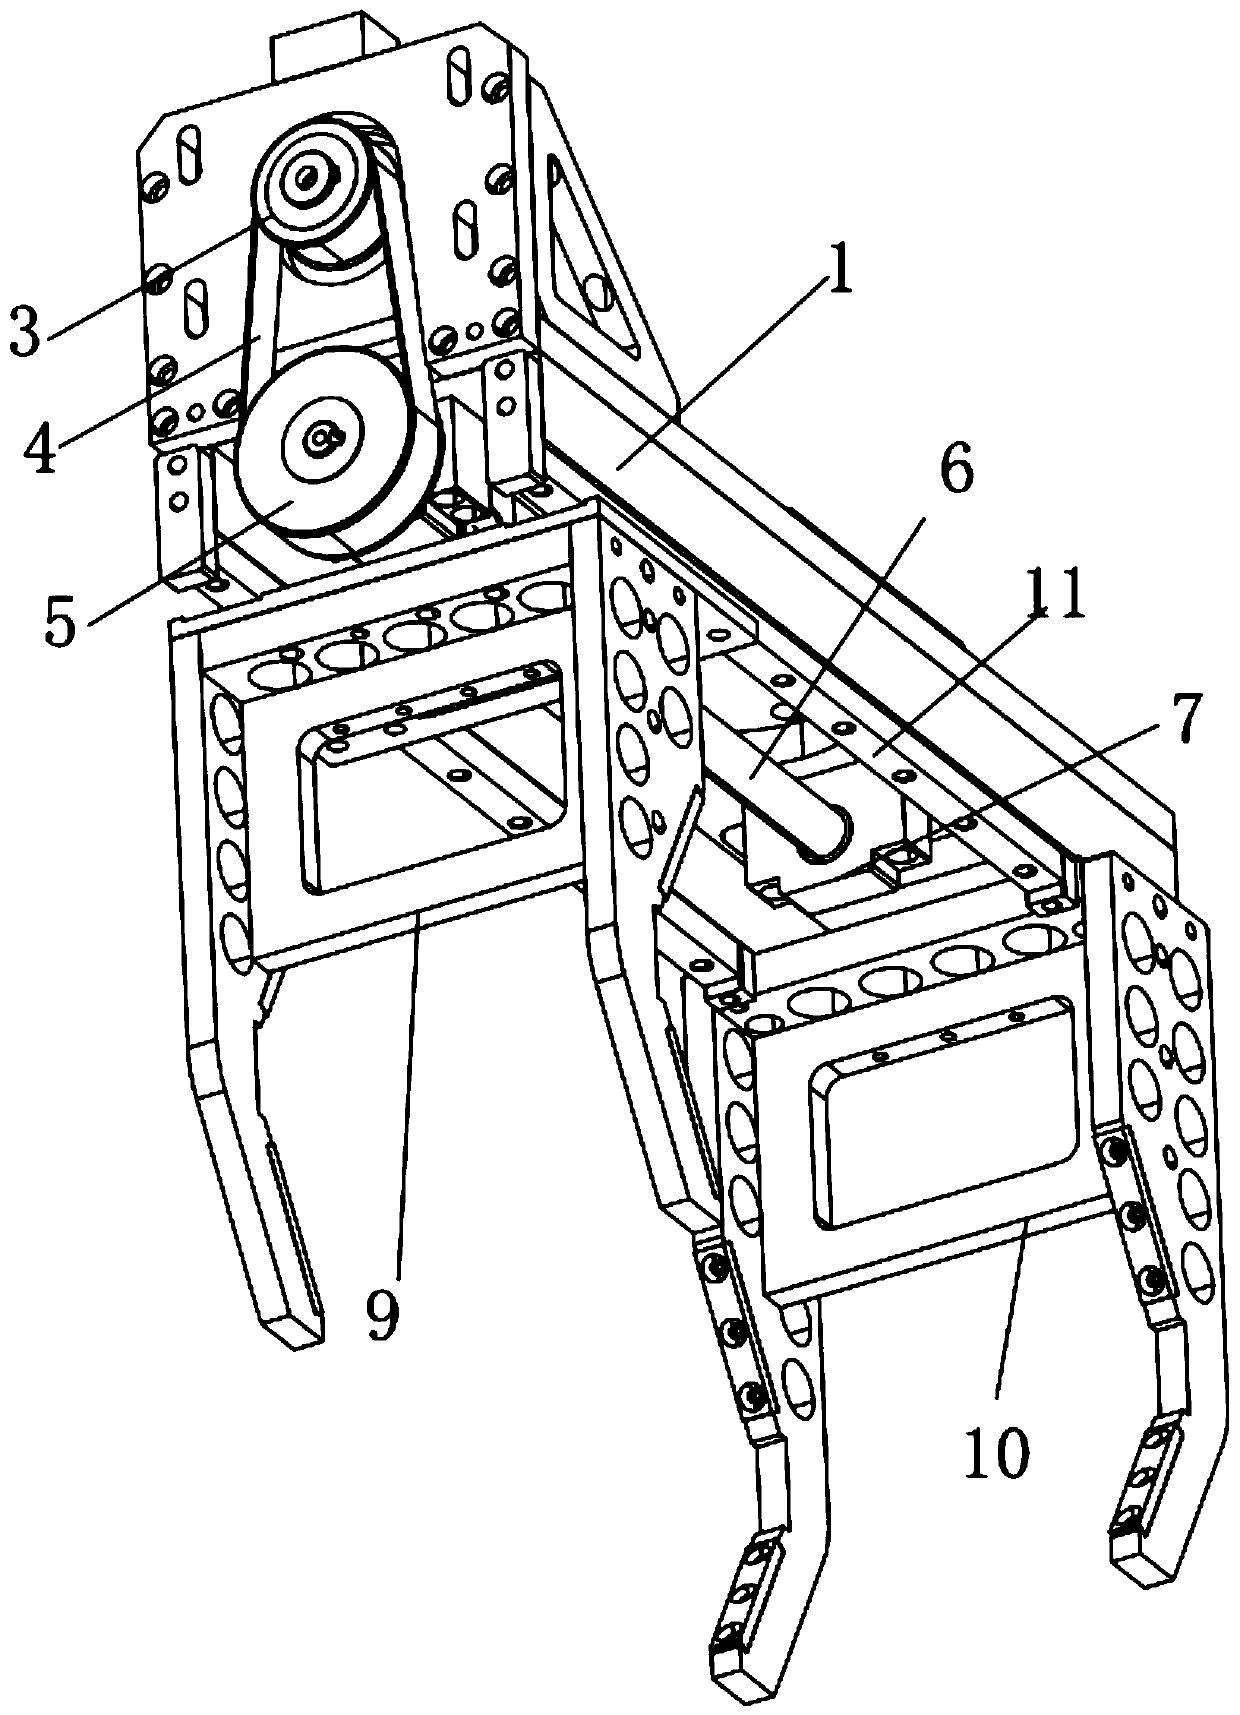 Mechanical arm